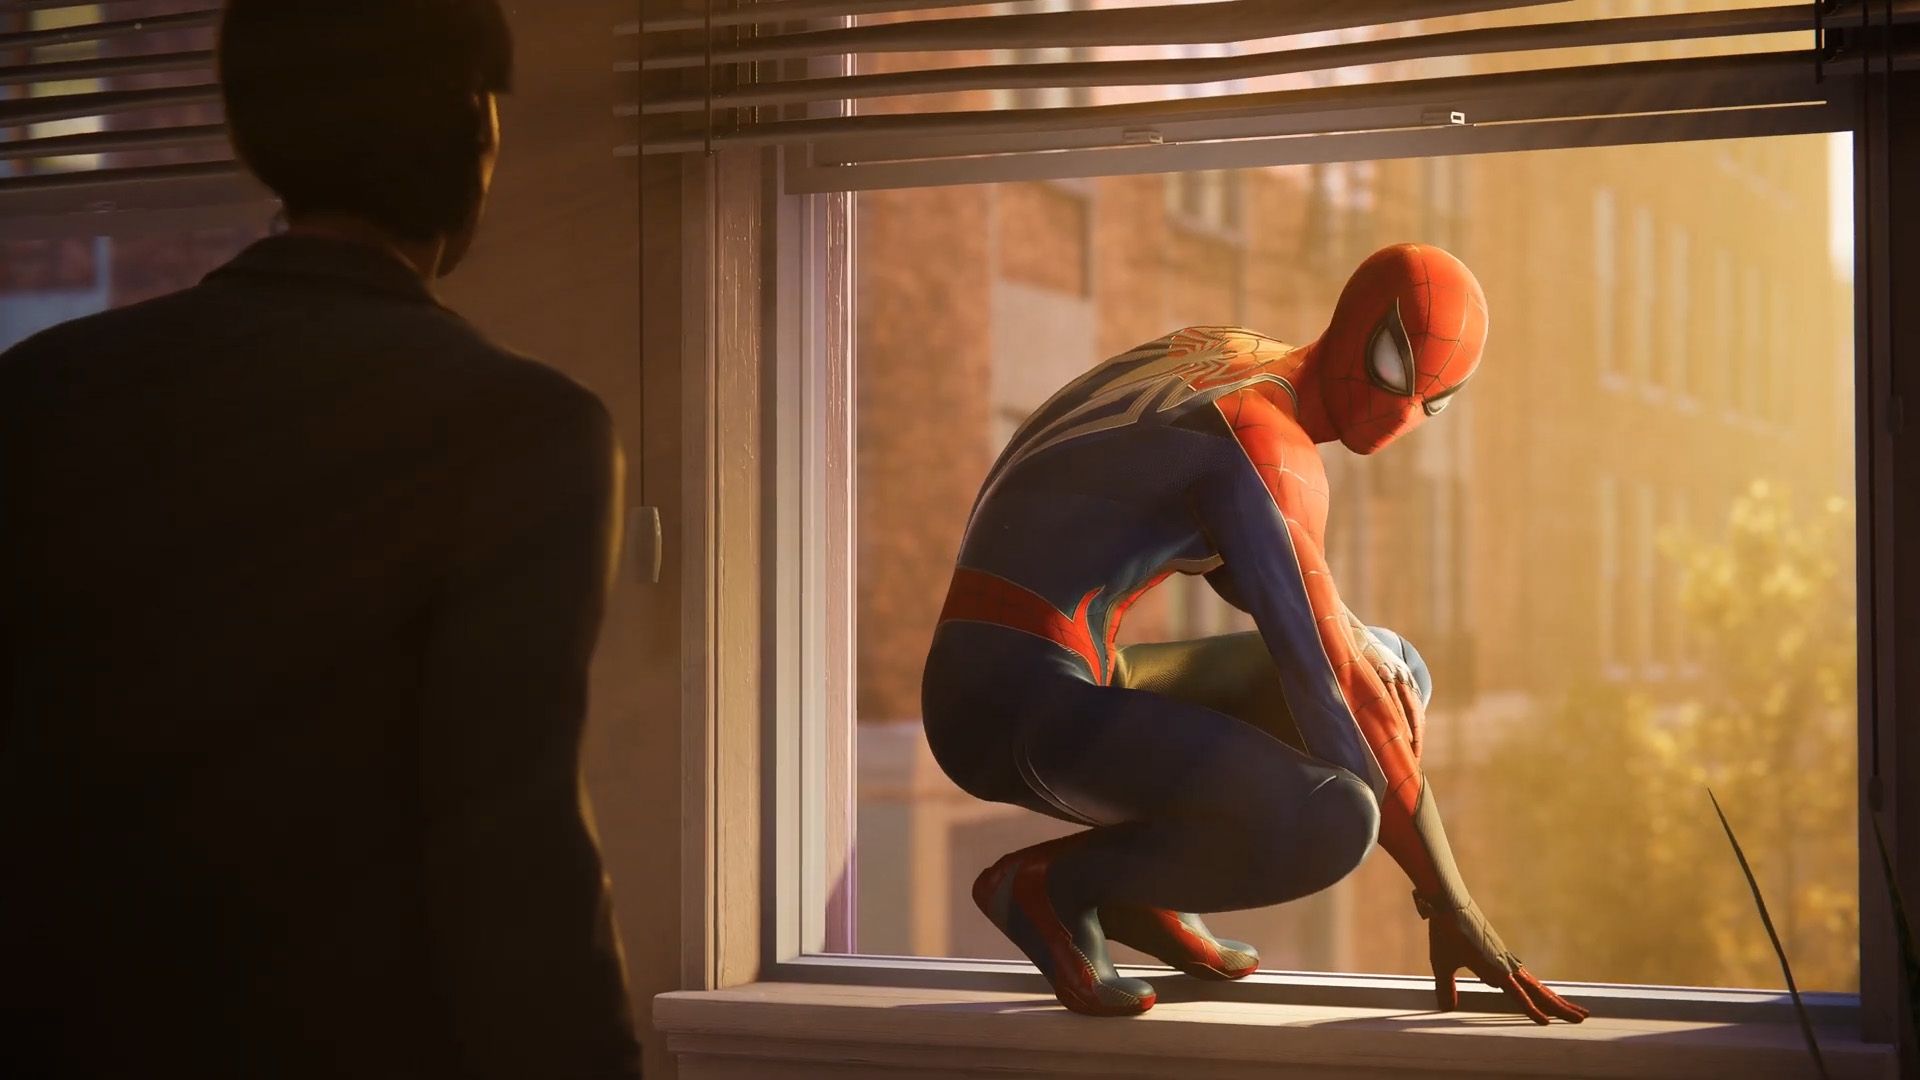 Marvel's Spider-Man 2 - Story Trailer